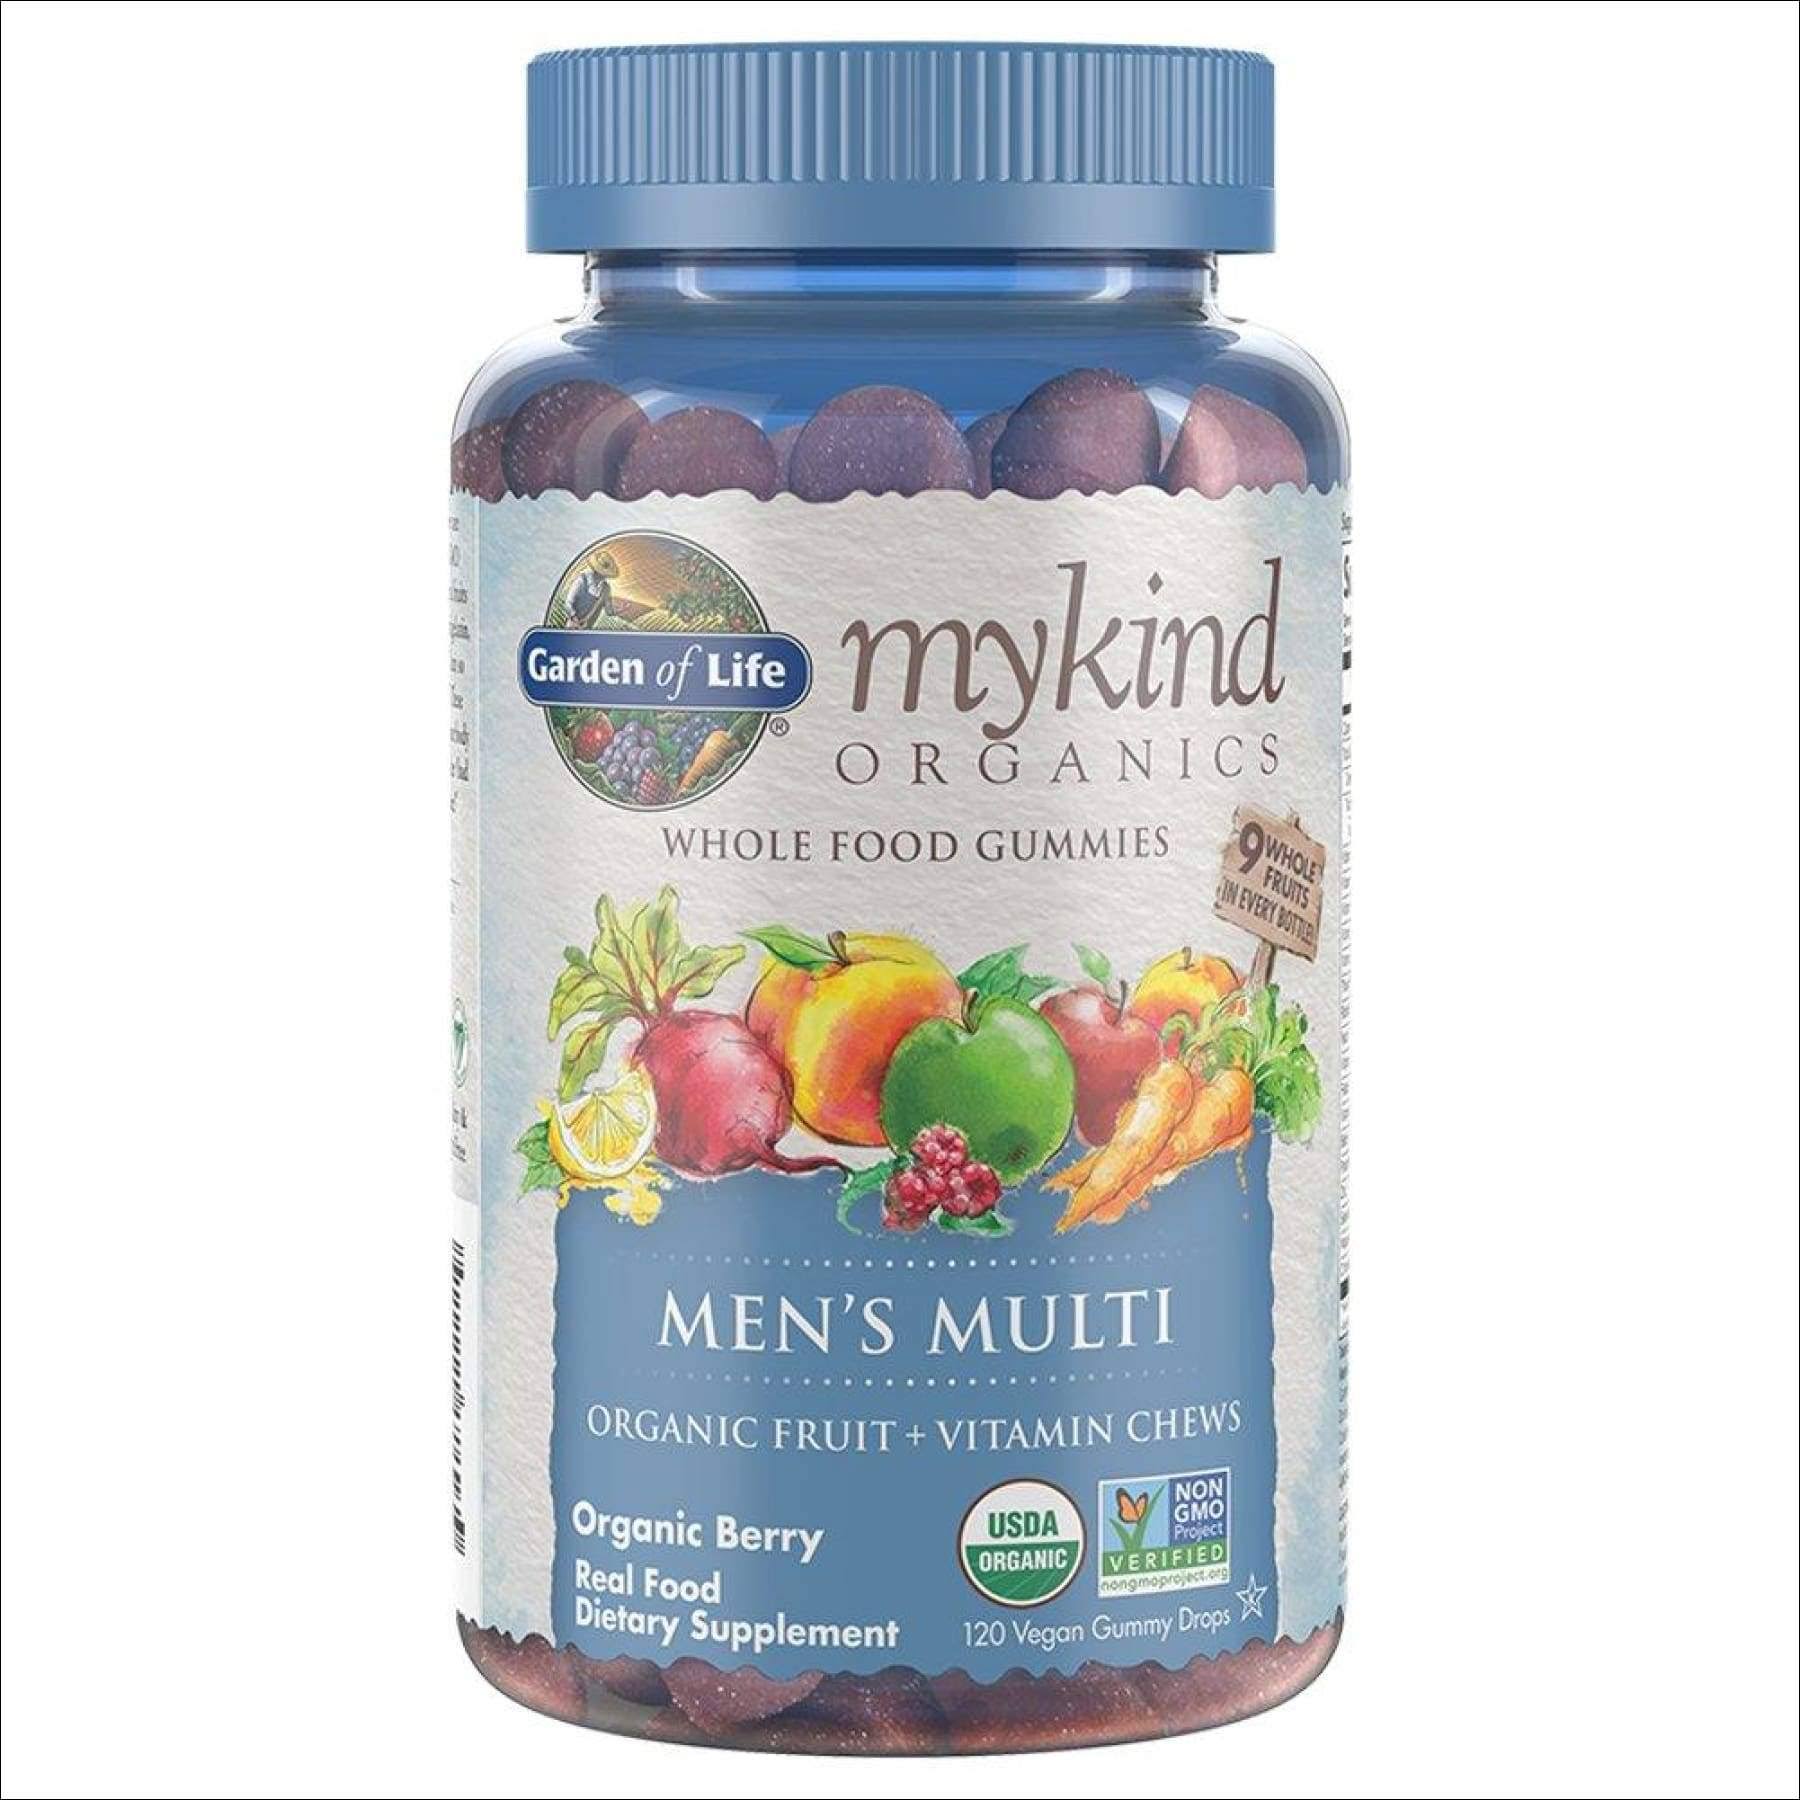 Garden of Life Mykind Organics Mens Multi Whole Food Gummies Vitamin - Berry, 120ct